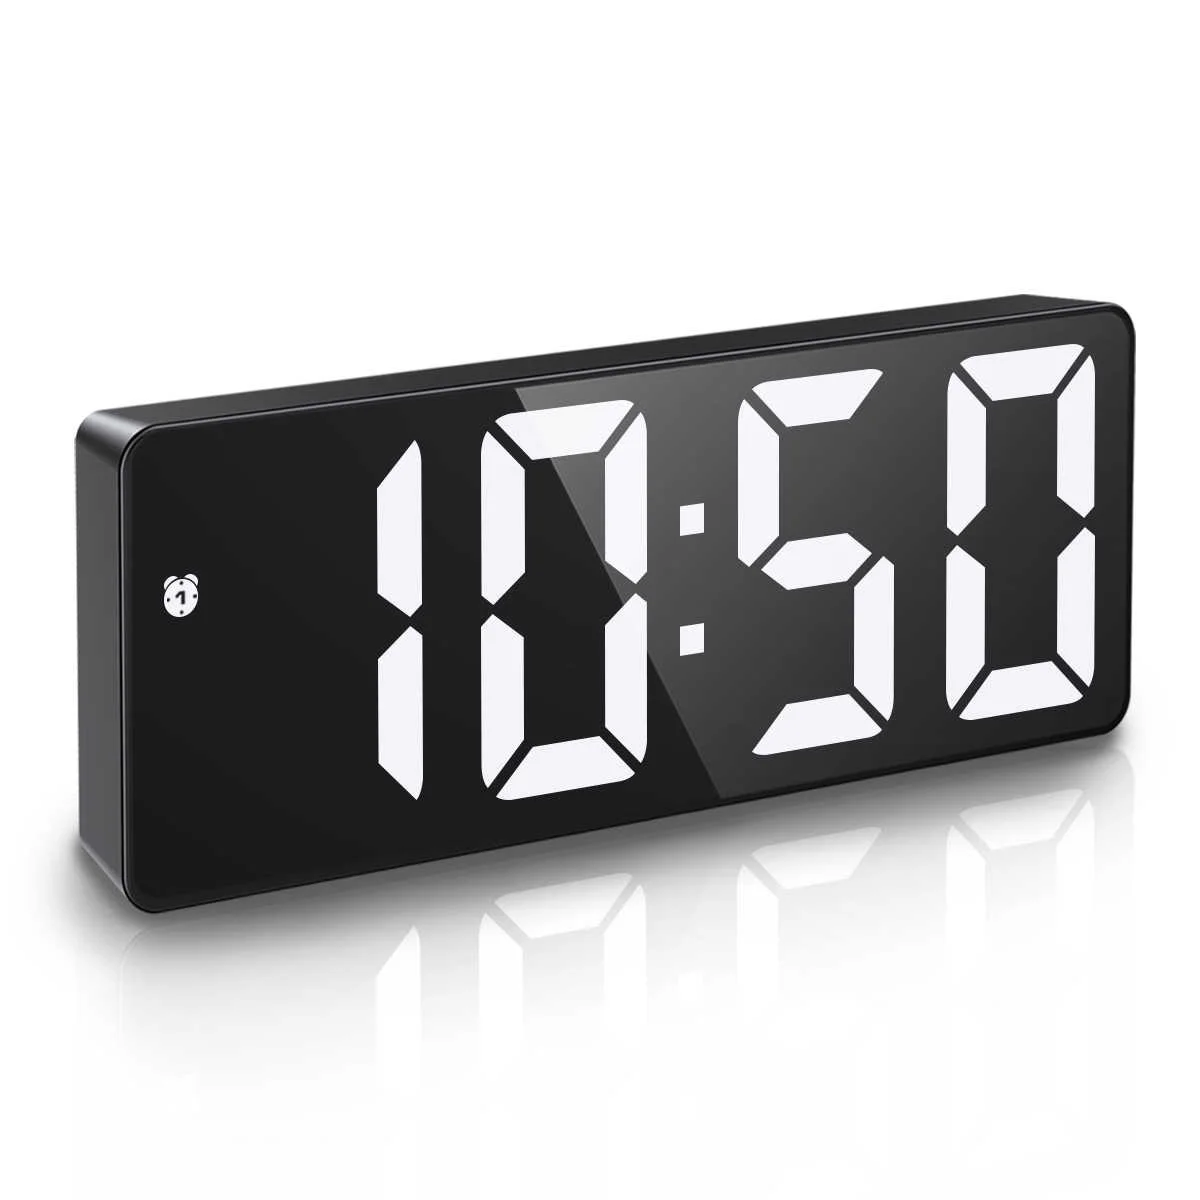 

ORIA Digital Alarm Clock LED Desktop Clock Voice Control Snooze Time Temperature Display Night Mode Reloj Despertador USB